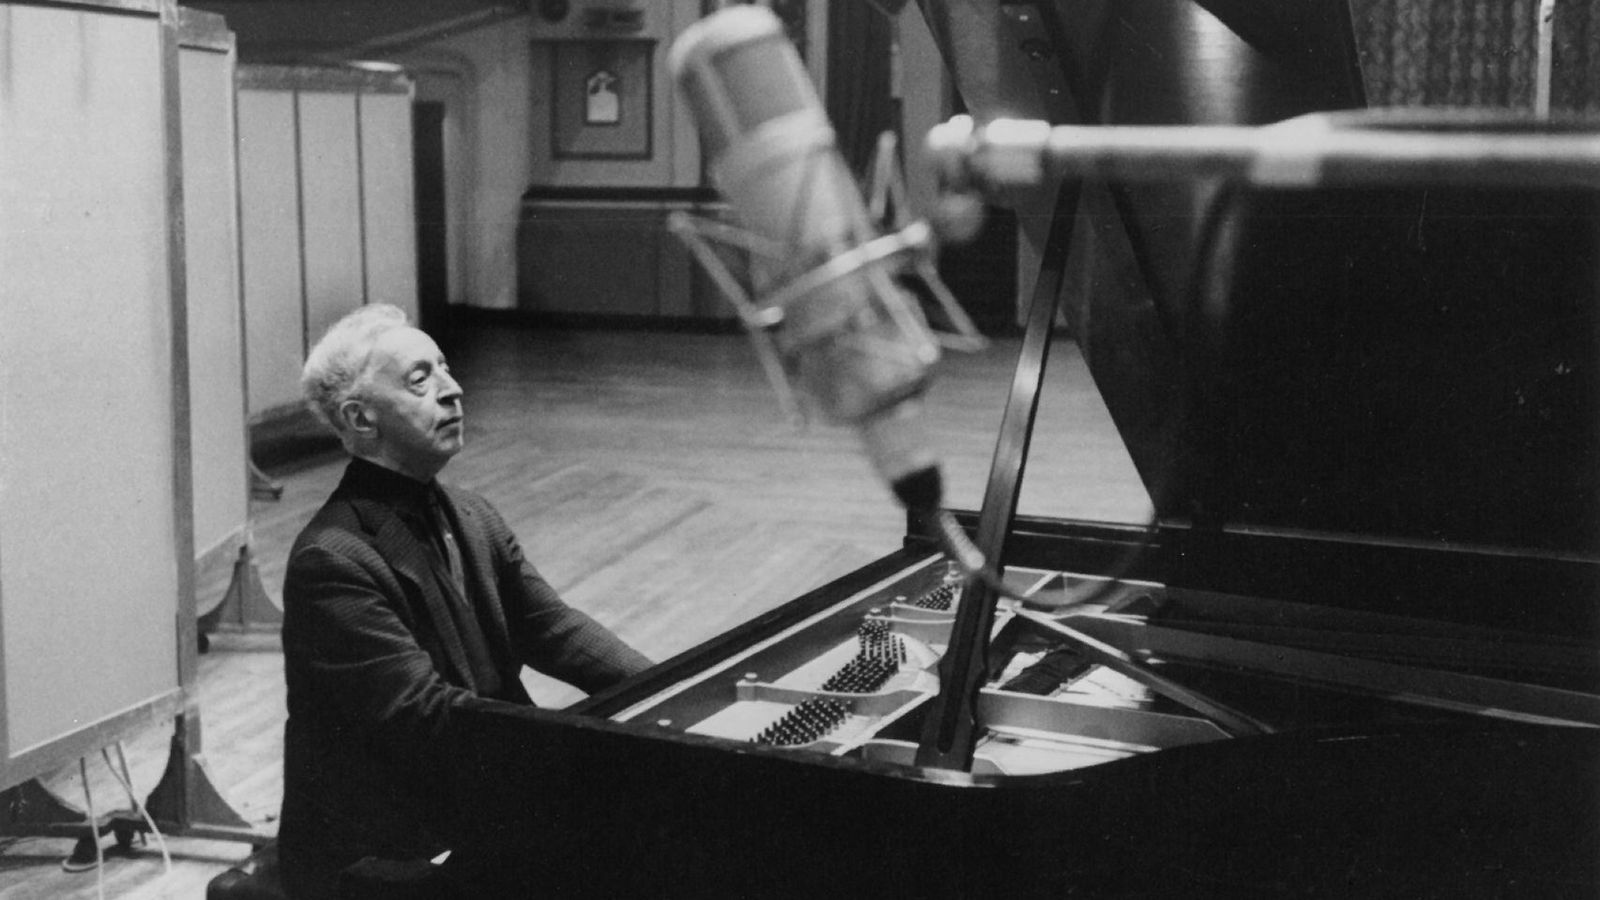 Arthur Rubinstein International Piano Master Competition - Wikipedia